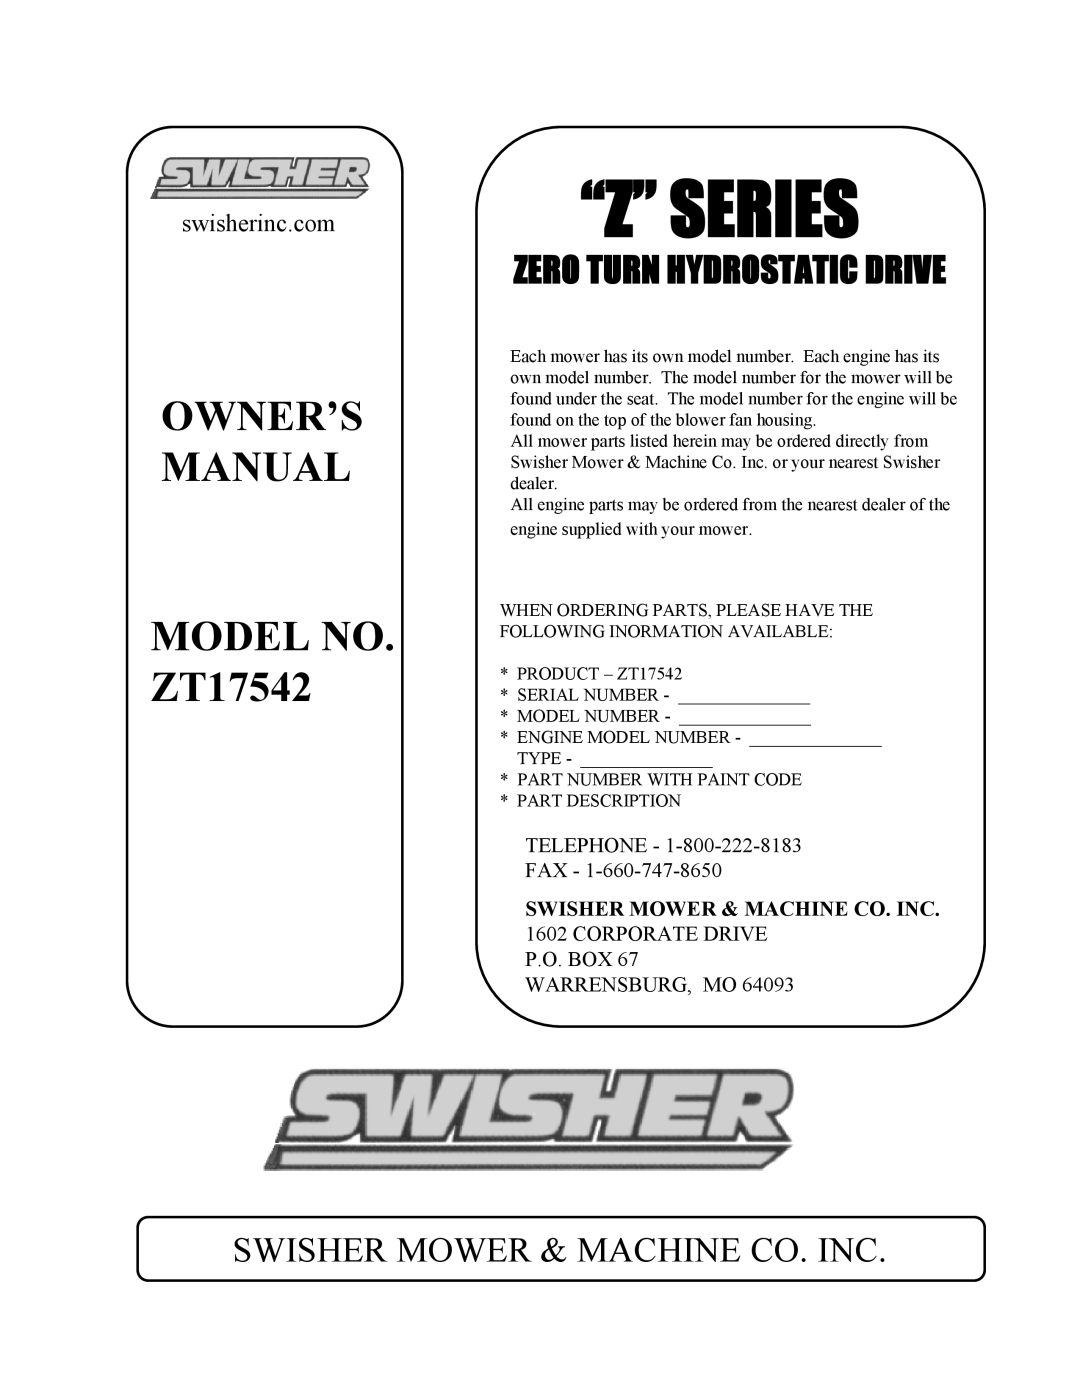 Swisher ZT17542B, ZT13536, ZT20050 OWNER’S MANUAL MODEL NO. ZT17542, Swisher Mower & Machine Co. Inc, “Z” Series 